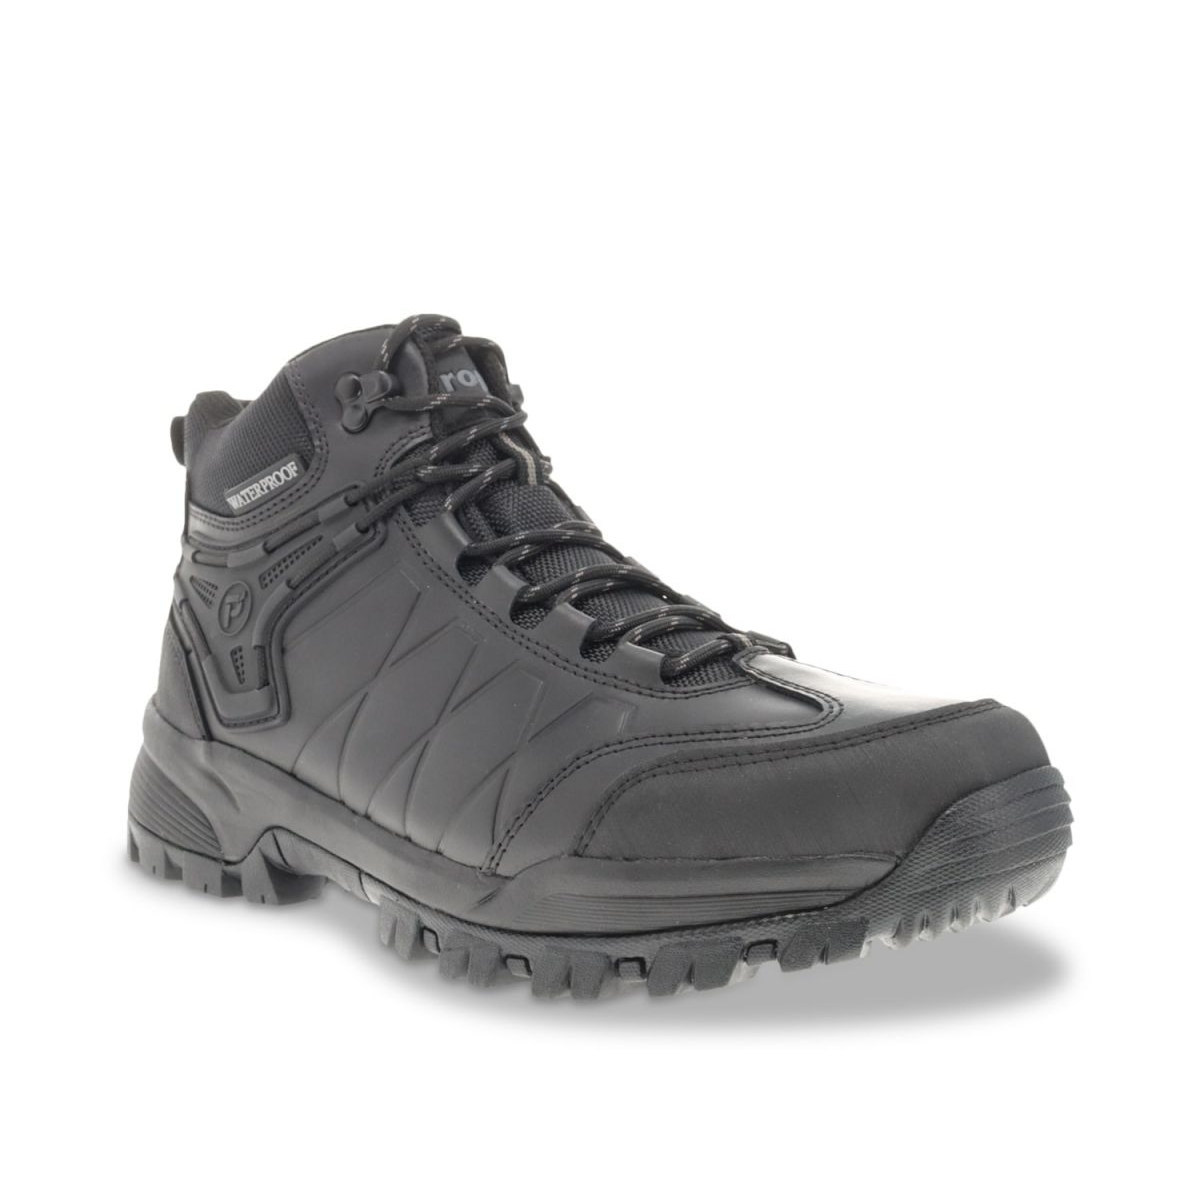 Propet Men's Ridge Walker Force Hiking Boots Black - MBA052LBLK BLACK - BLACK, 9.5